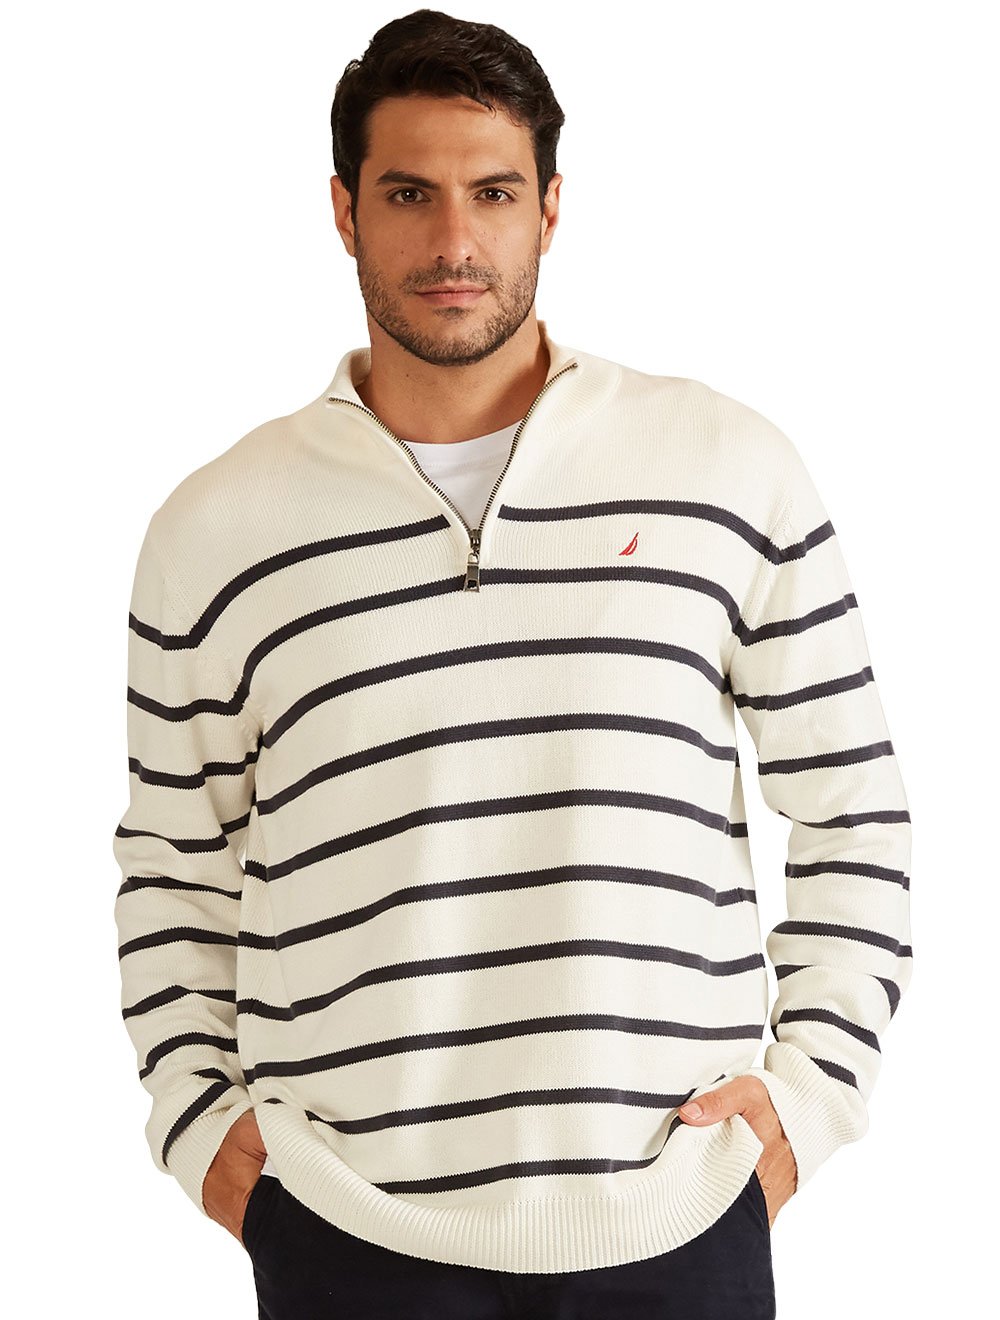 Blusa Nautica Masculina Tricot Sweater Half-Zip Navy Stripes Off-White